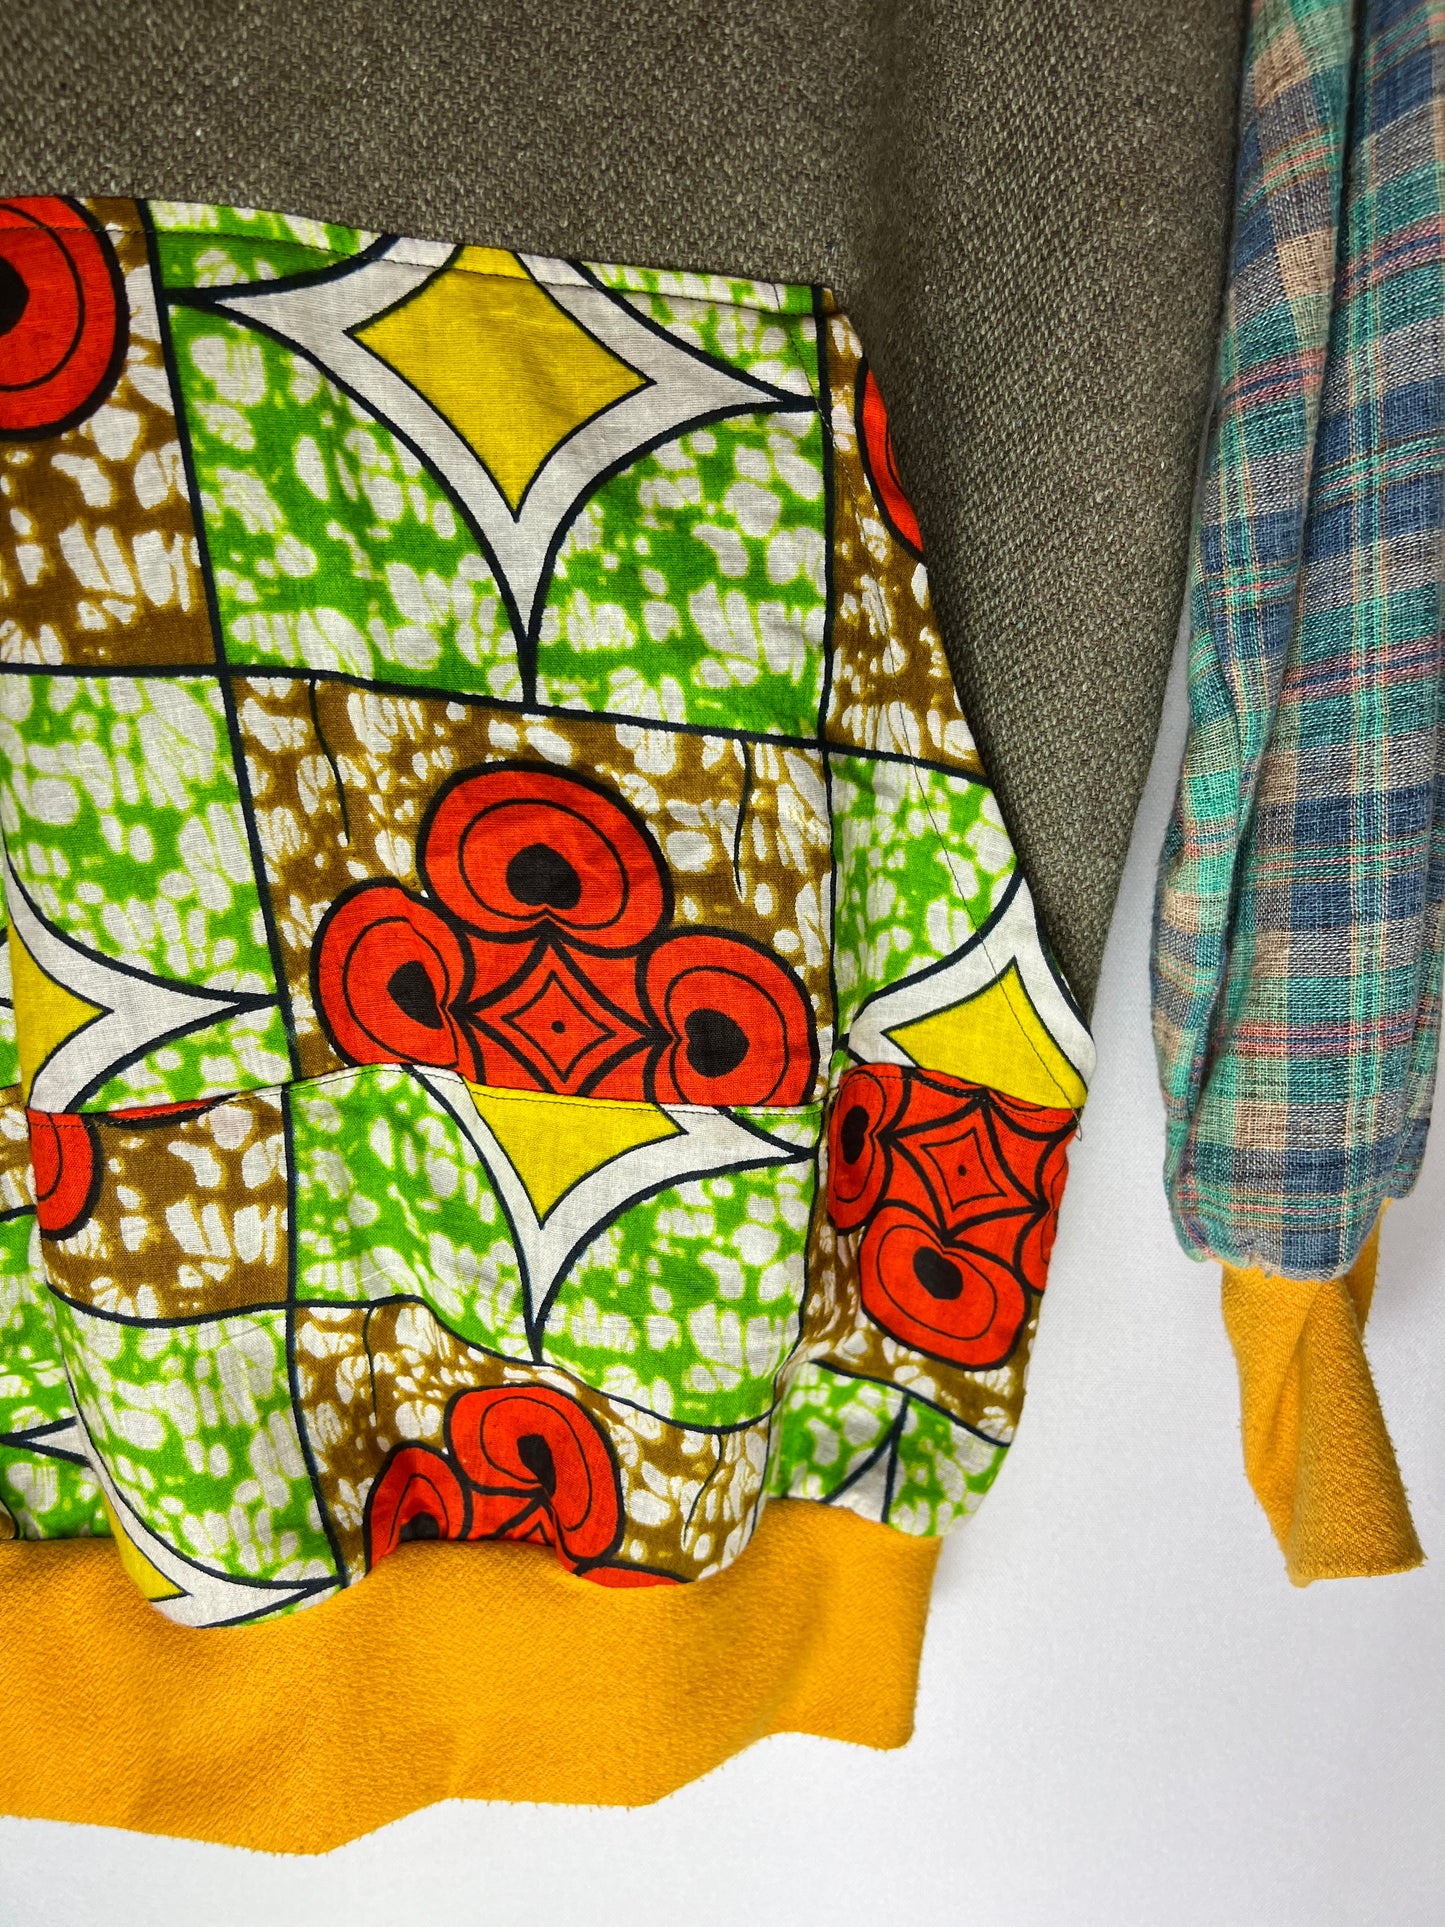 Matsinhe Craft patterned hoodie (Size L)